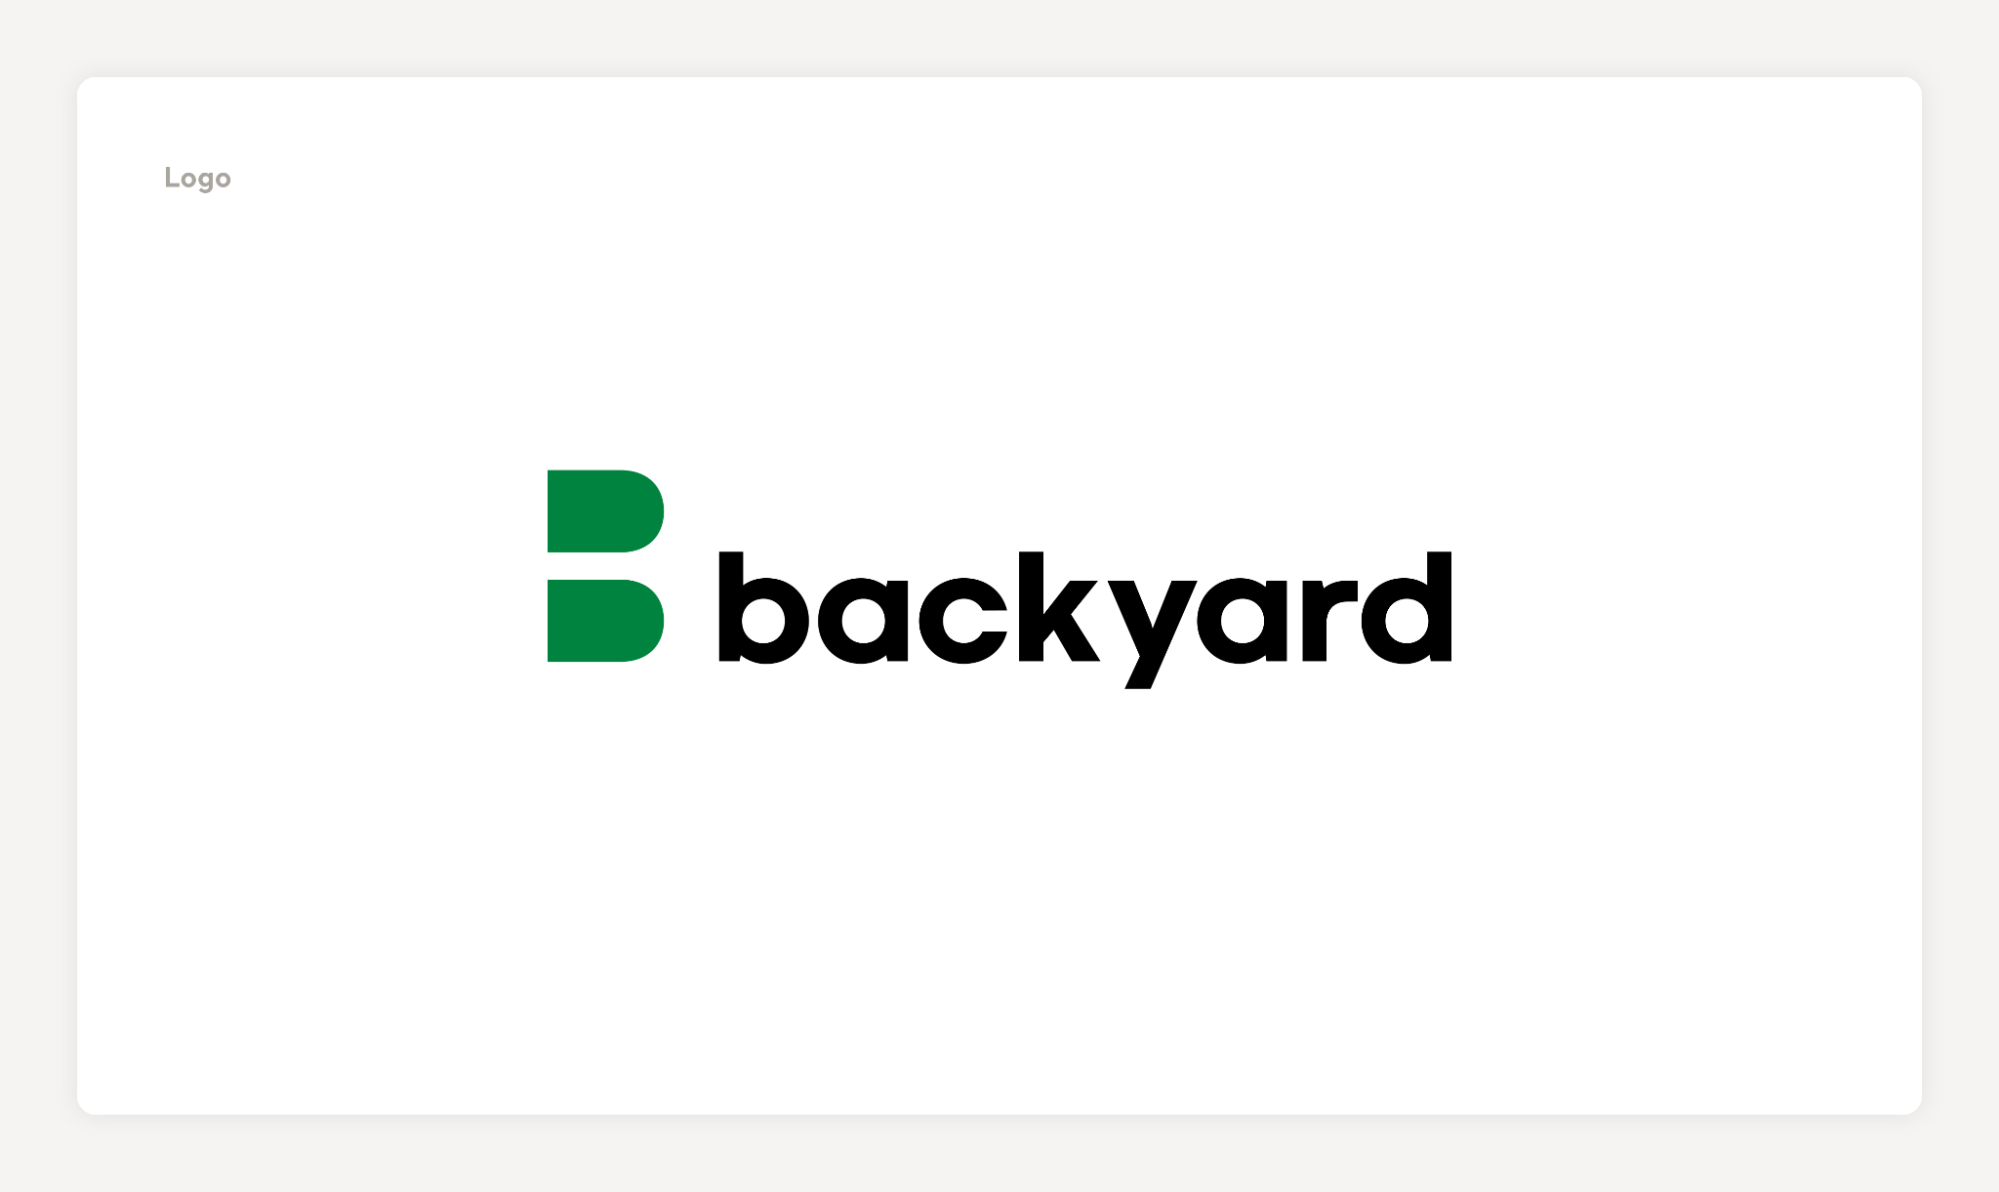 「backyard」と書かれたロゴのデザイン案。